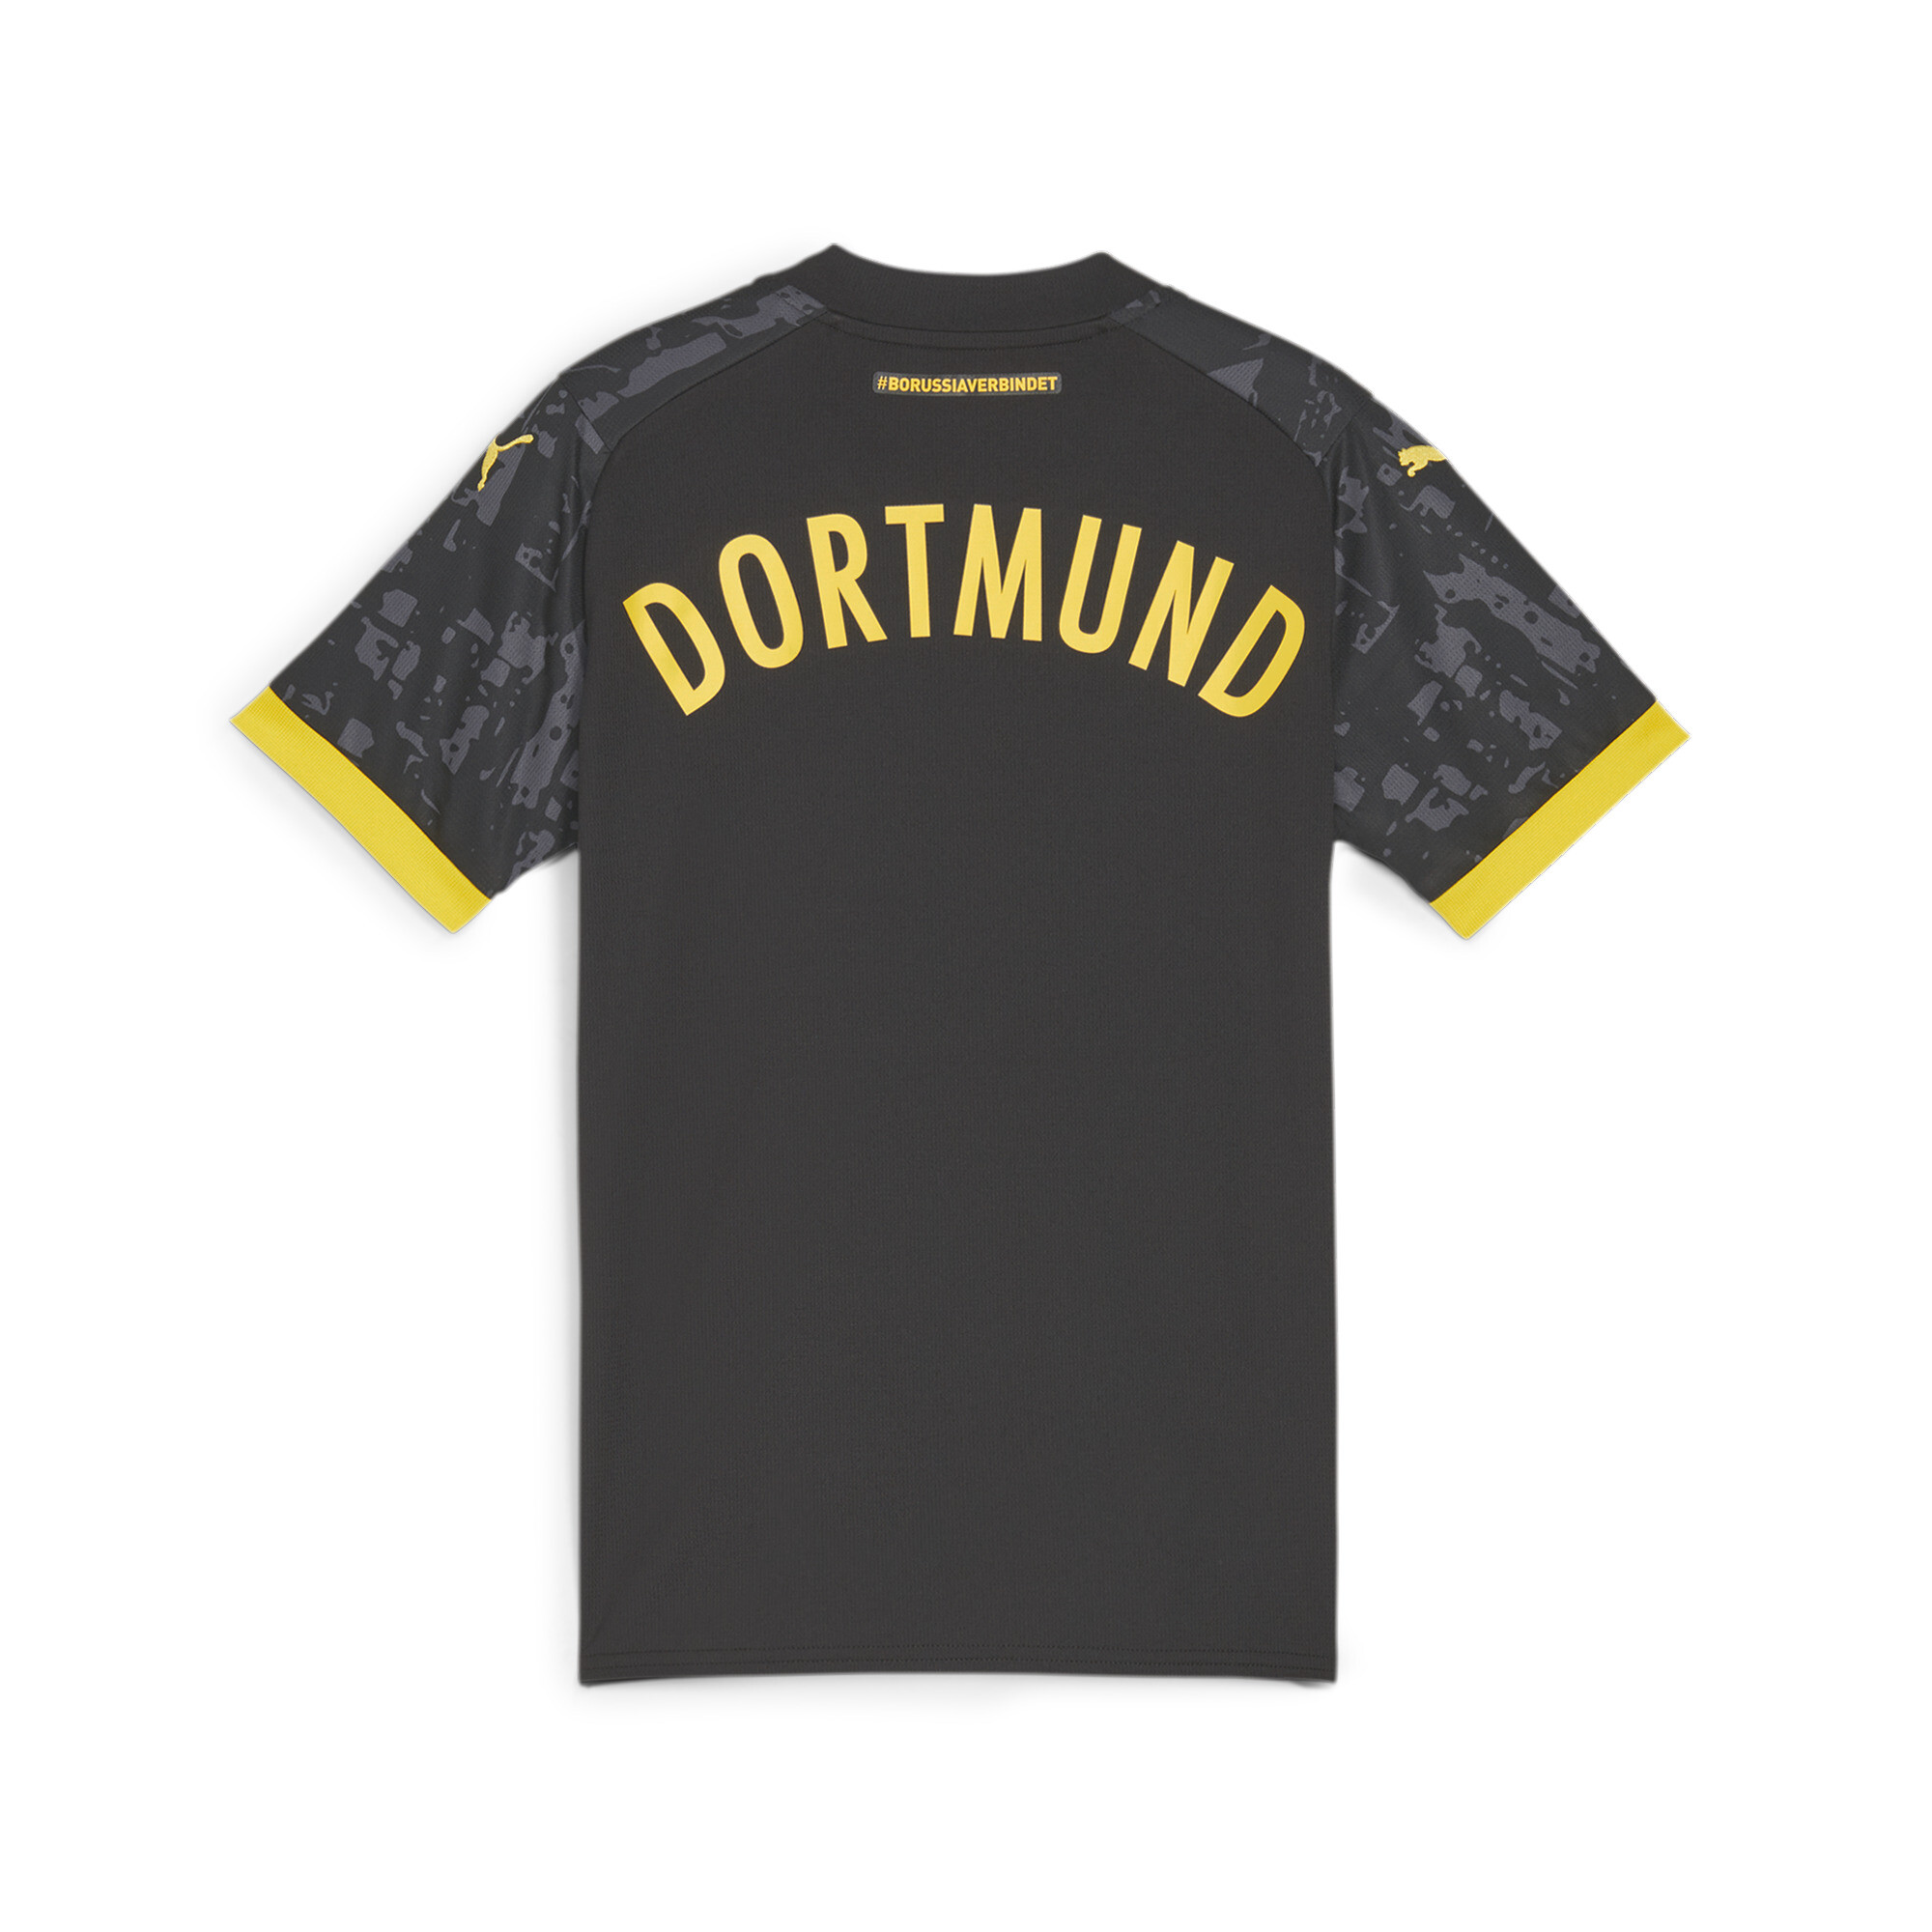 Puma Borussia Dortmund 23/24 Youth Away Jersey, Black, Size 11-12Y, Clothing